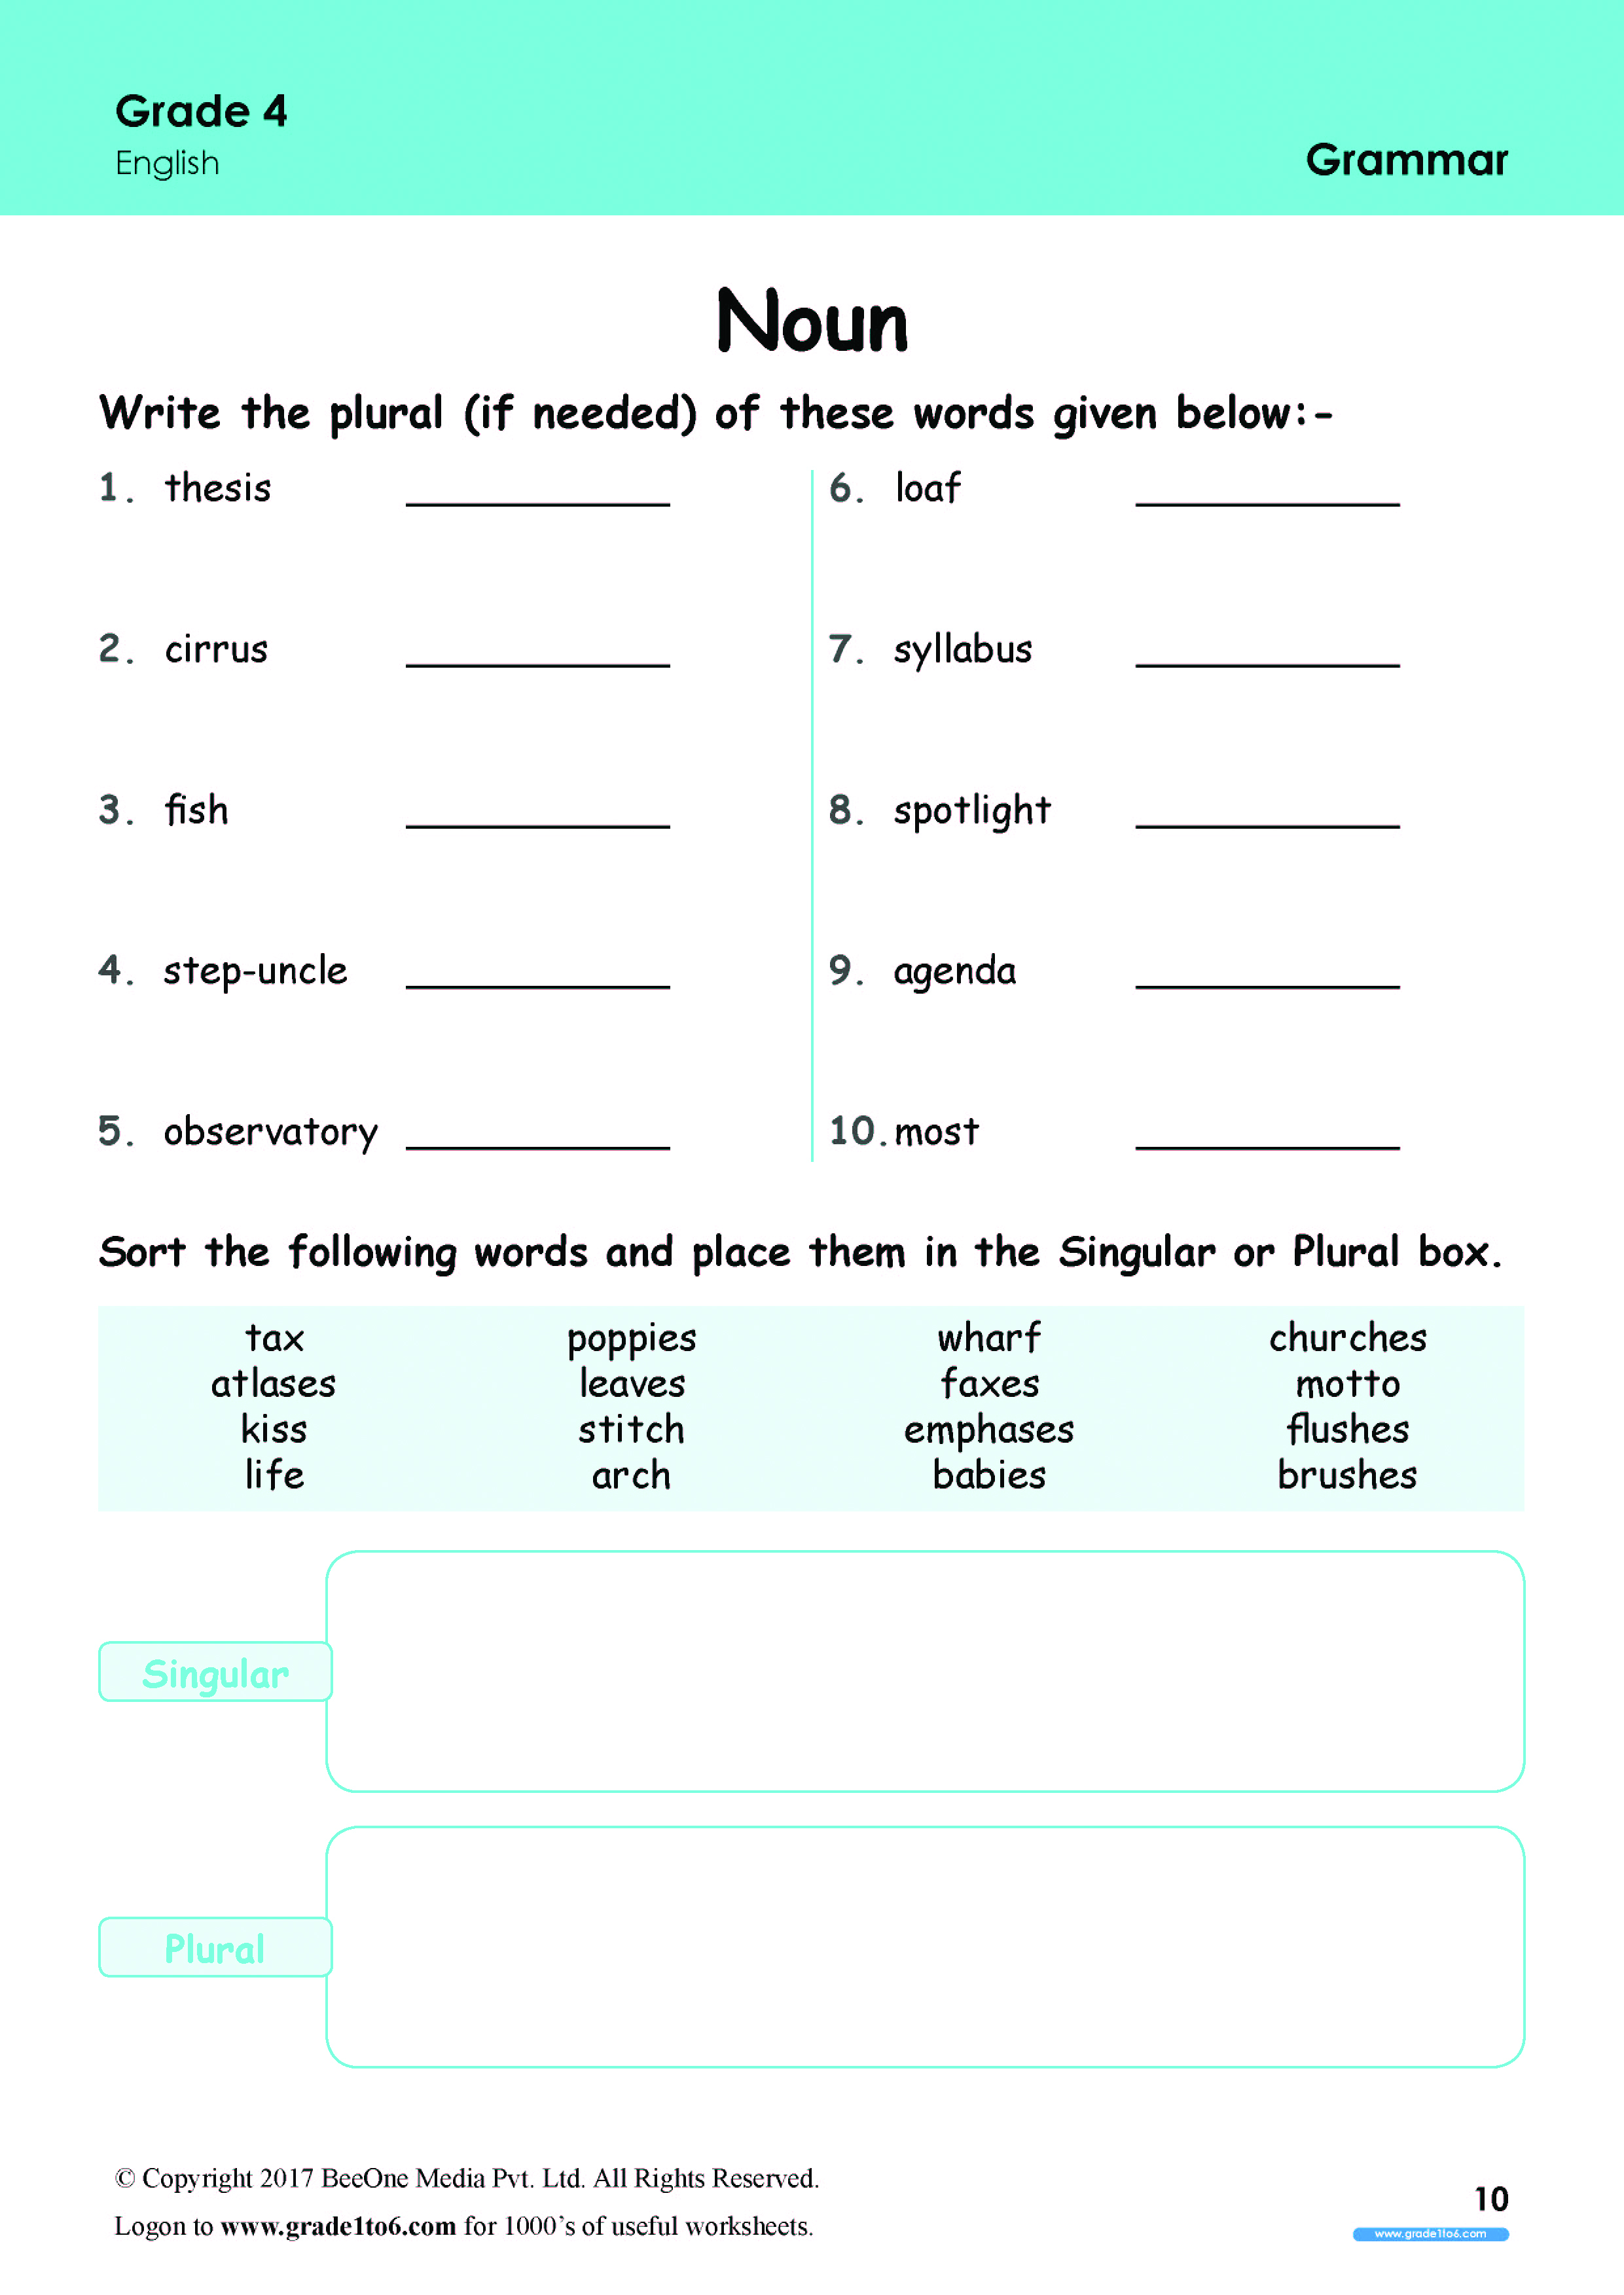 grade-4-grammar-worksheets-k5-learning-articles-for-class-4-worksheet-earline-weary